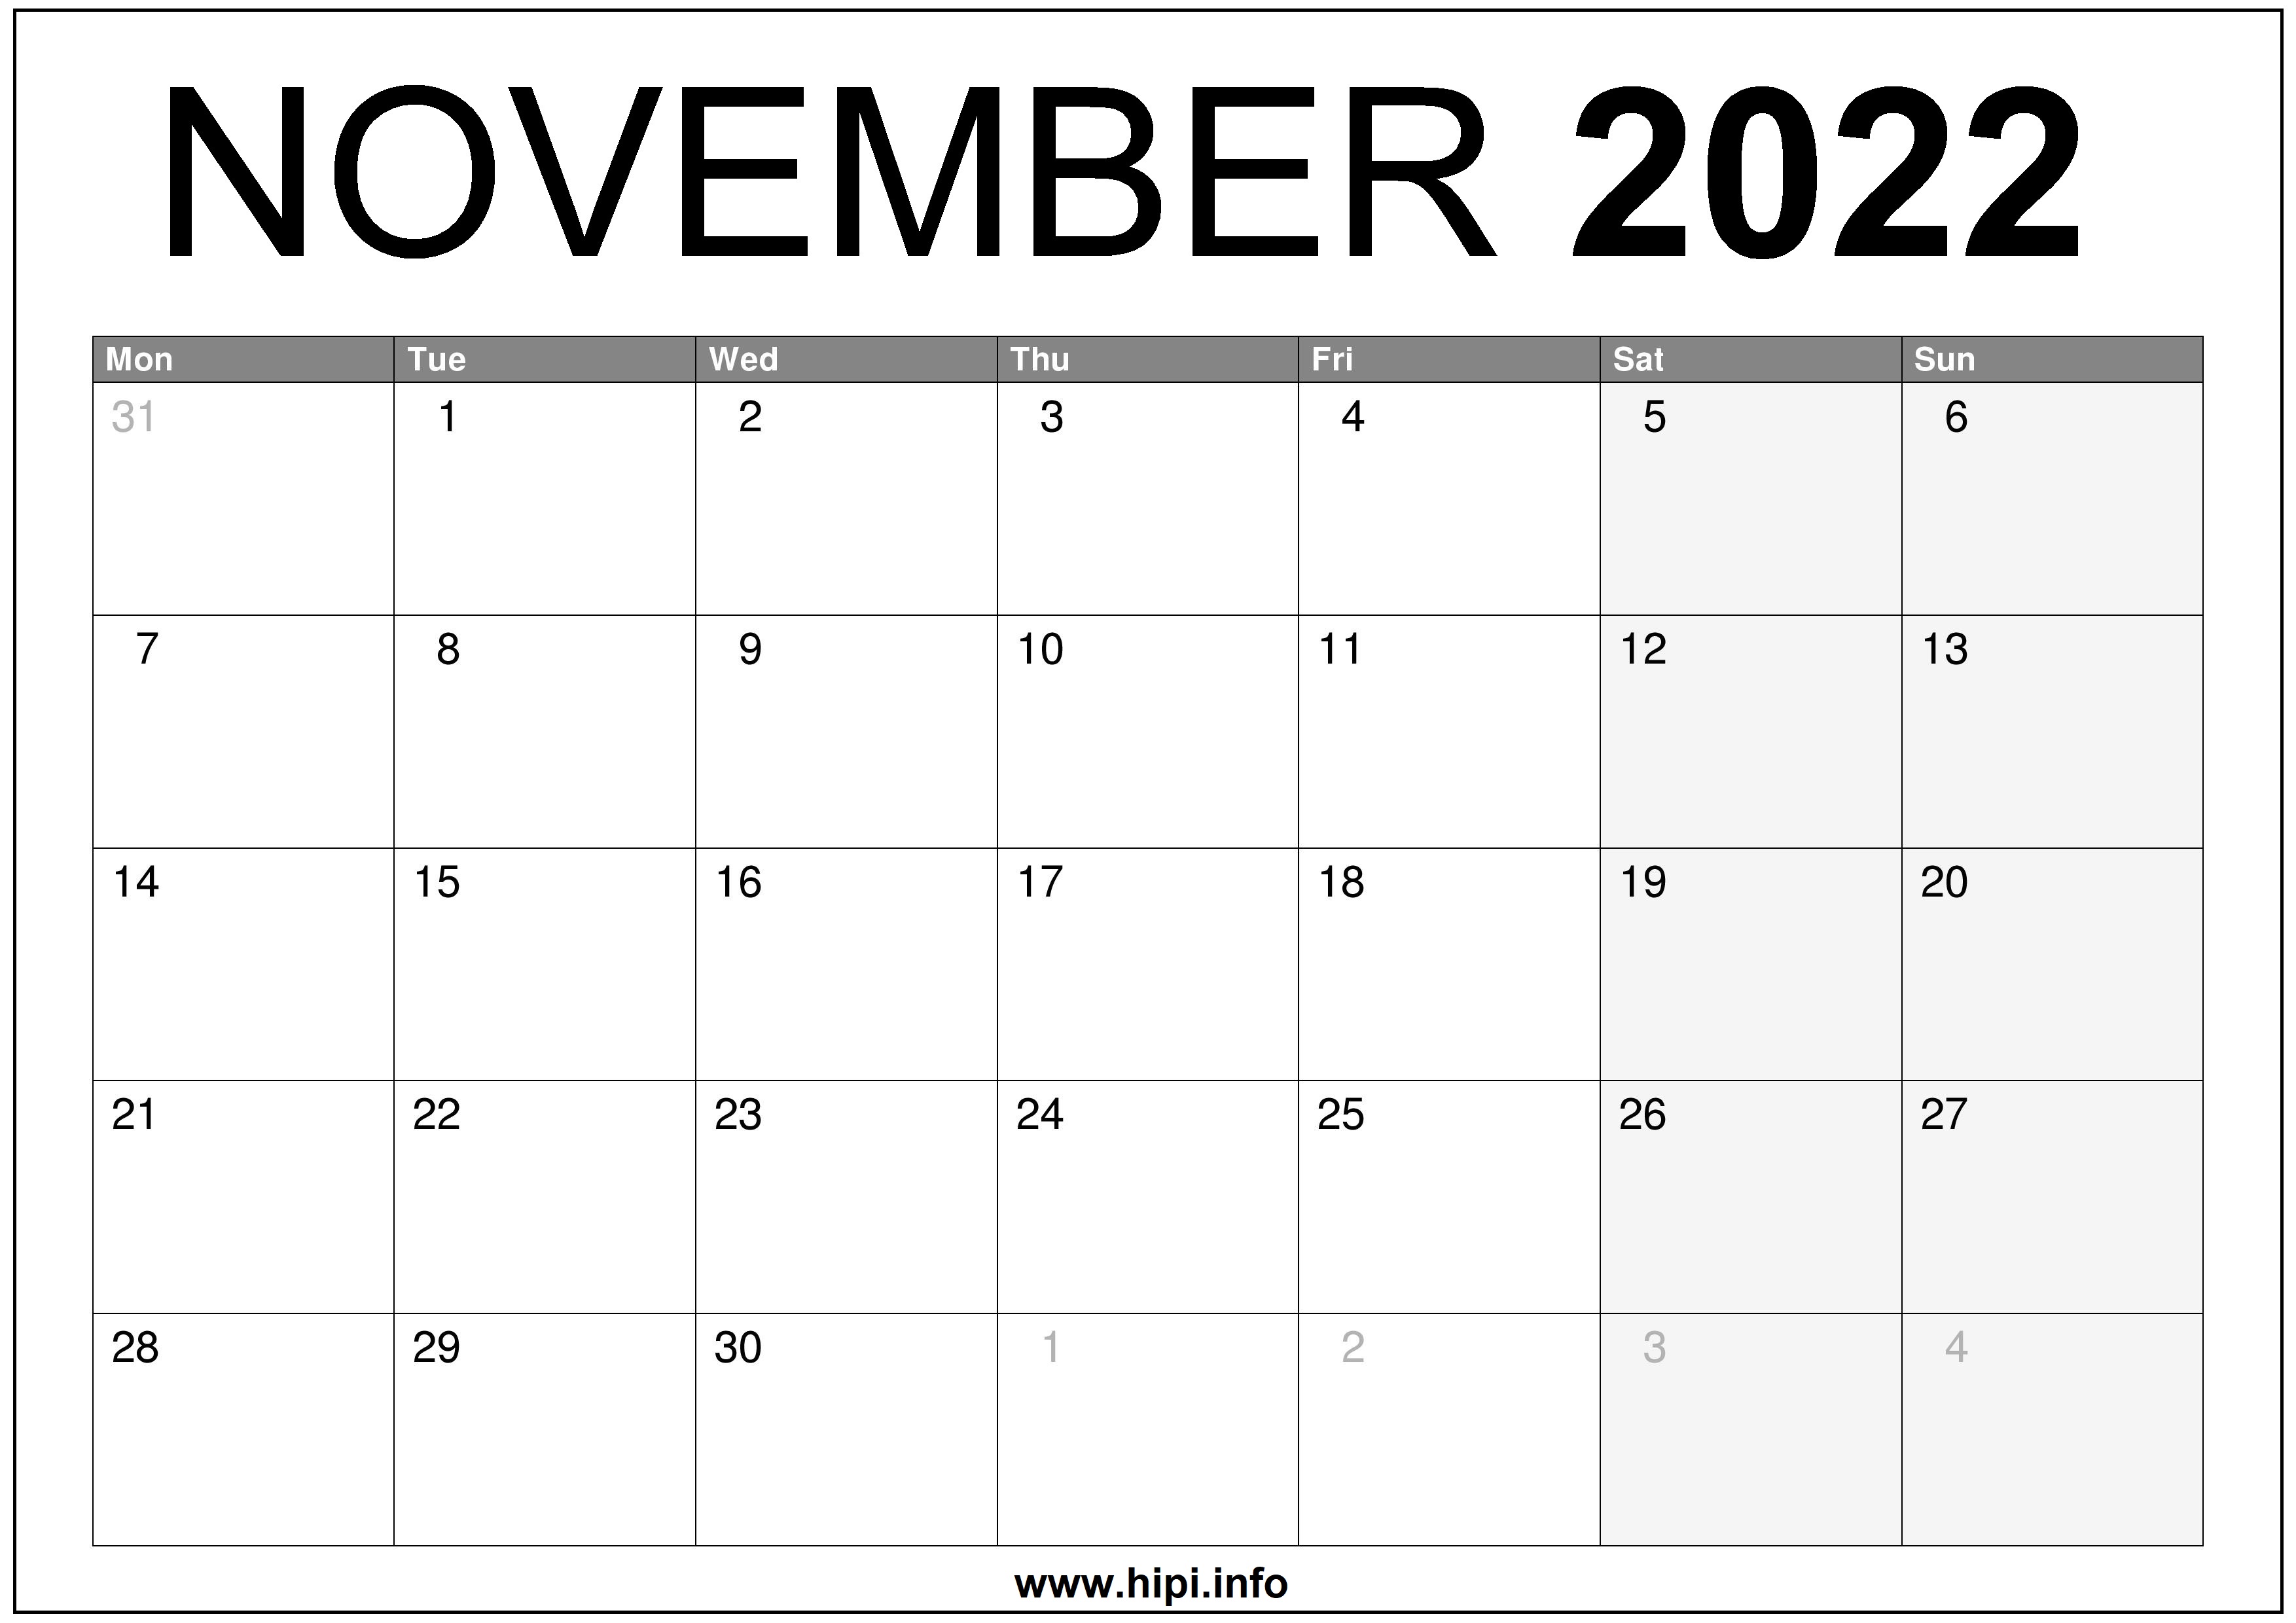 Monthly Calendar 2022 November November 2022 Uk Calendar Printable Free - Hipi.info | Calendars Printable  Free